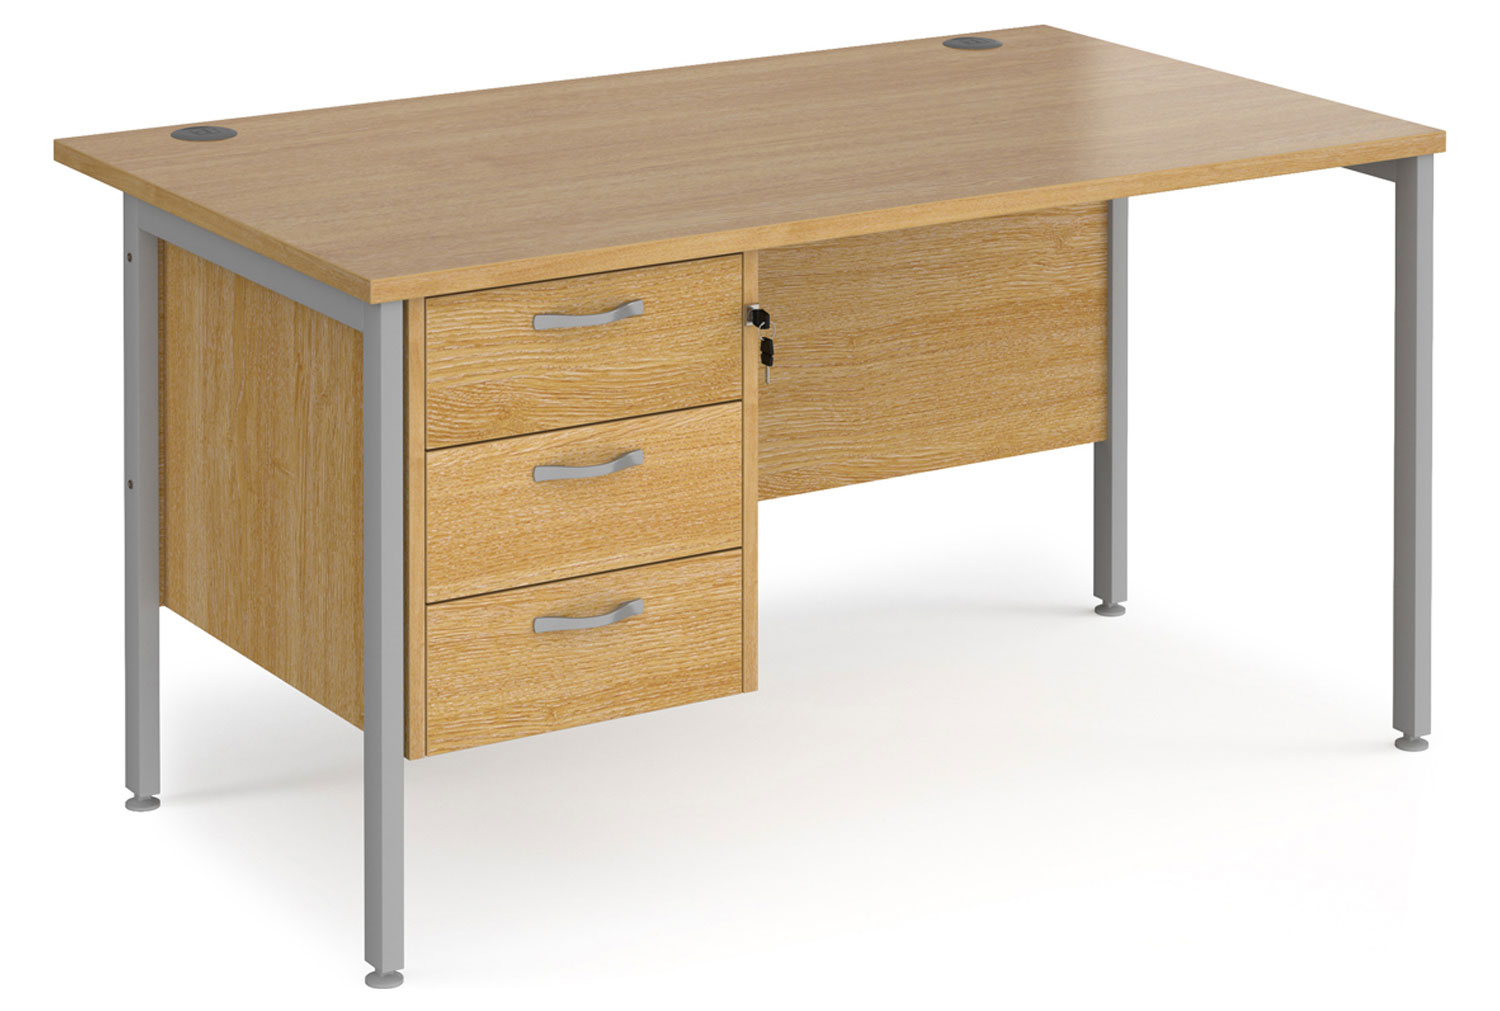 Value Line Deluxe H-Leg Rectangular Office Desk 3 Drawers (Silver Legs), 140wx80dx73h (cm), Oak